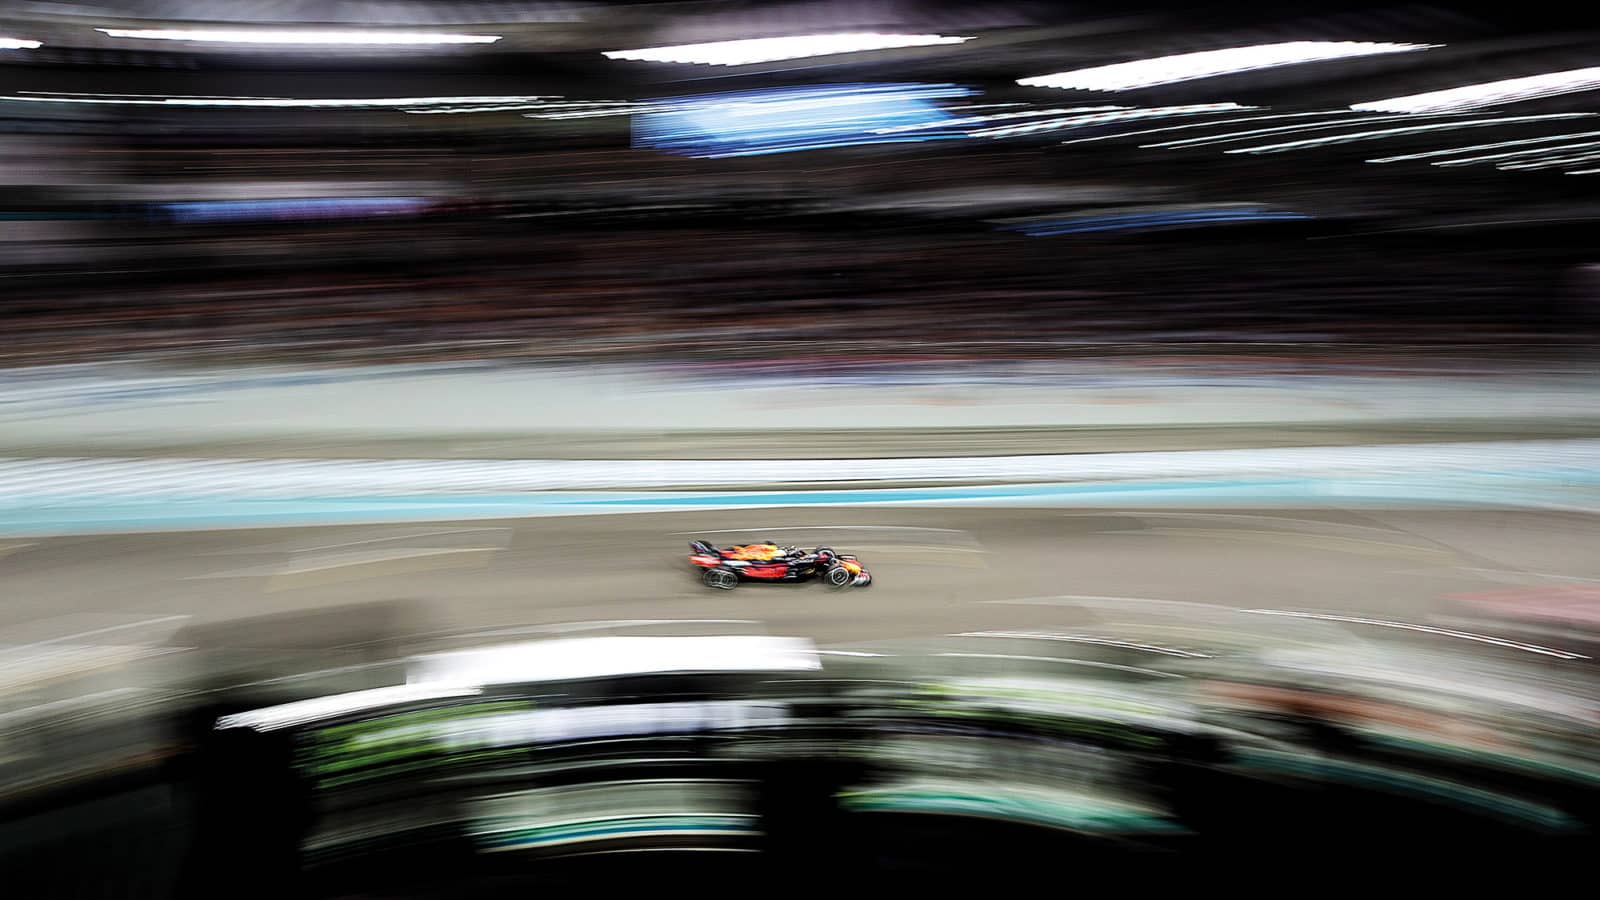 Blurred photo of Max Verstappen in the 2021 Abu Dhabi Grand Prix